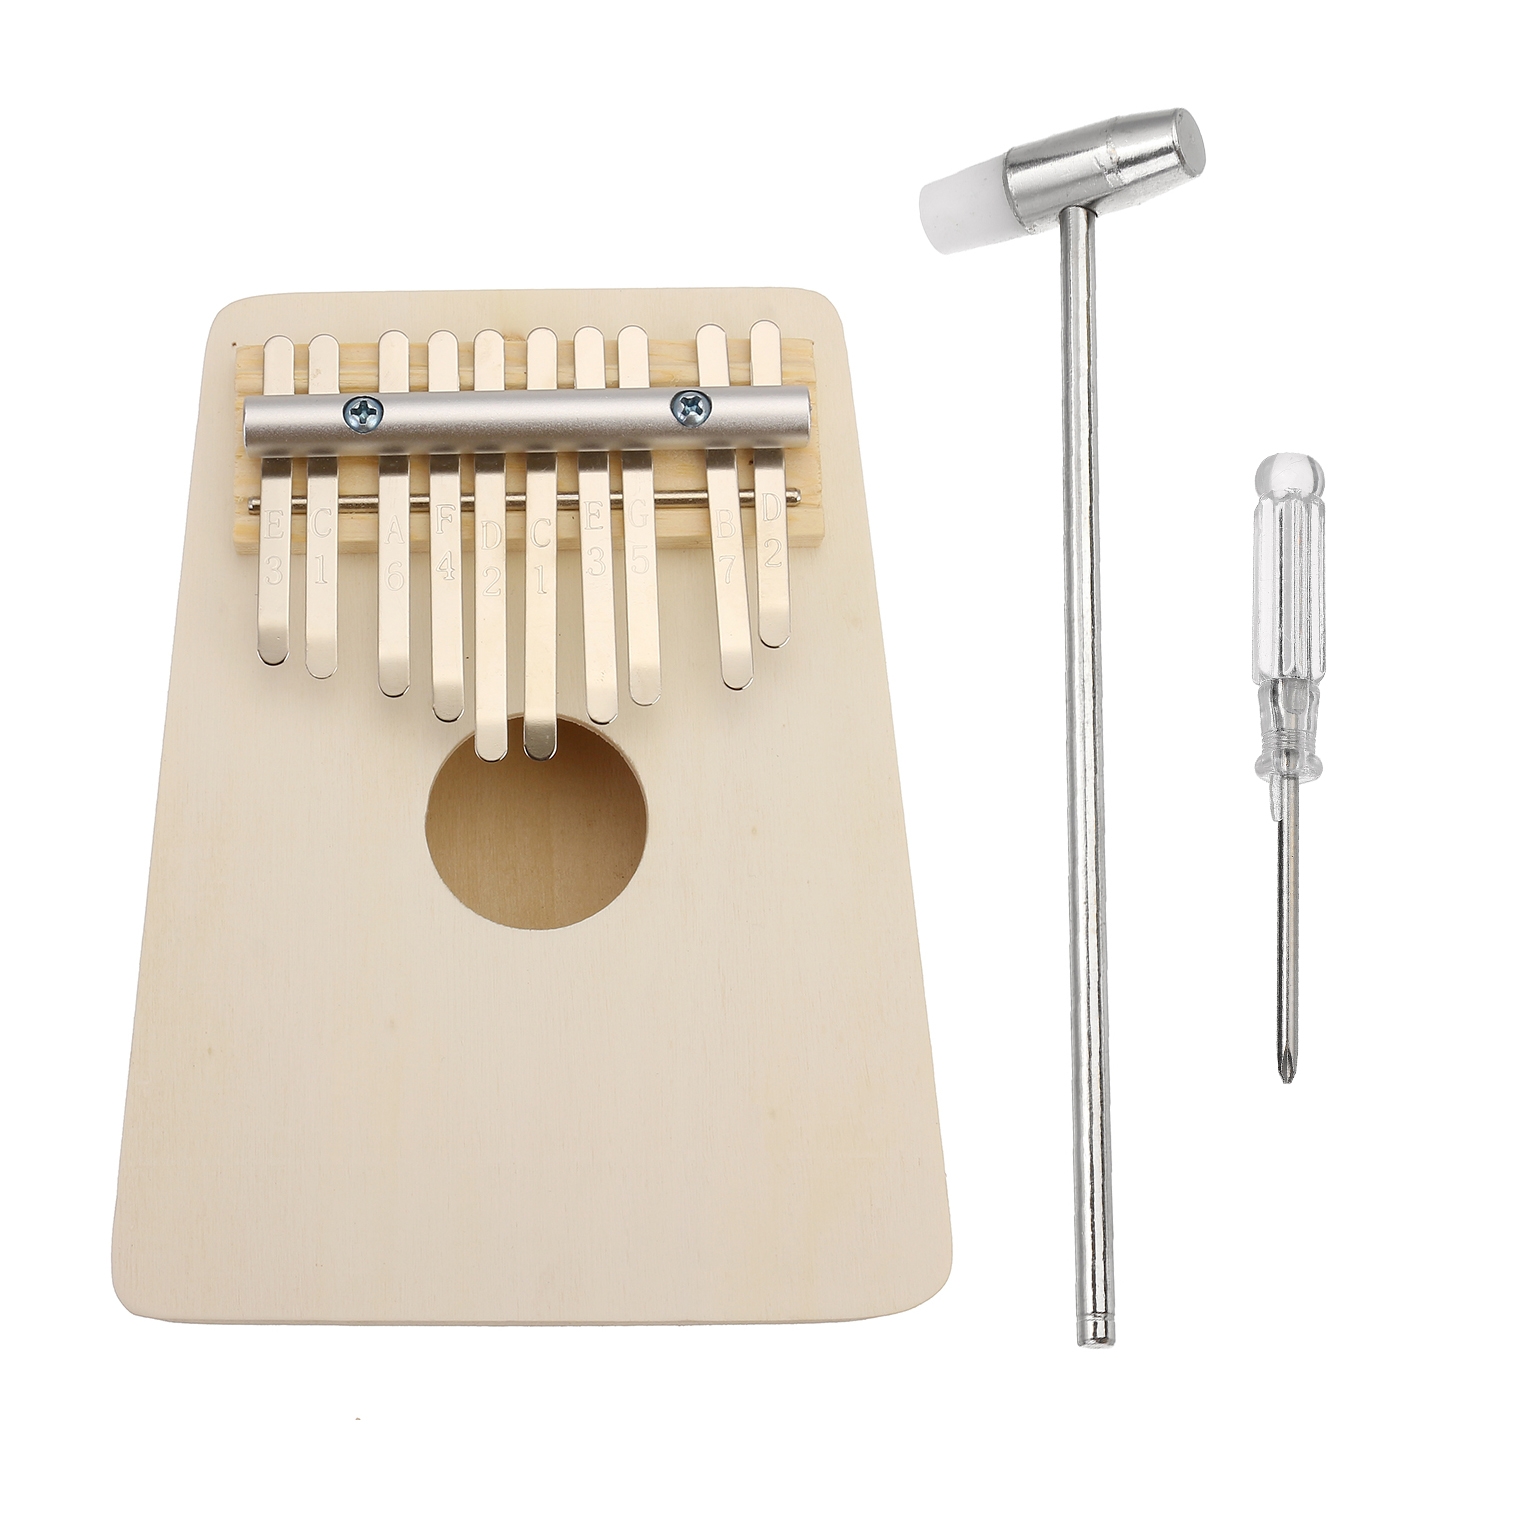 10 Keys Kalimba Wood Thumb Piano Finger Keyboard Musical Instrument w/Tuning Hammer